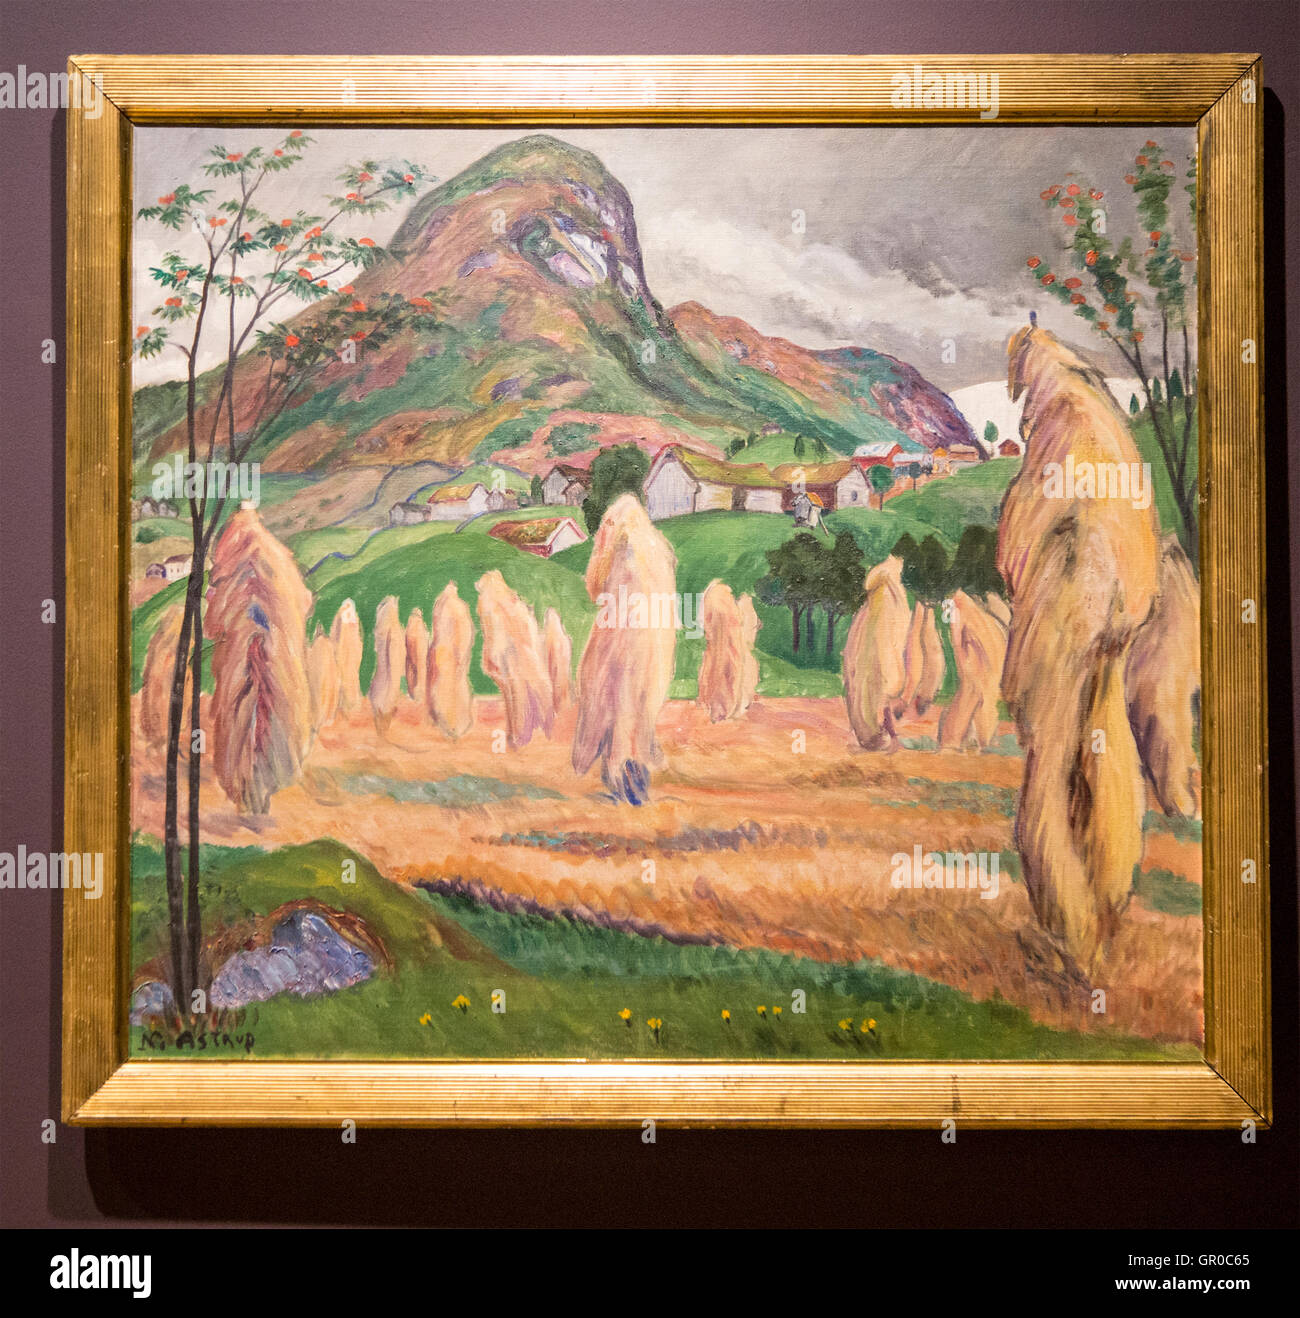 'Grain Poles' undated oil painting on canvas by Nikolai Astrup 1880-1928, Kode 4 art gallery Bergen, Norway Stock Photo